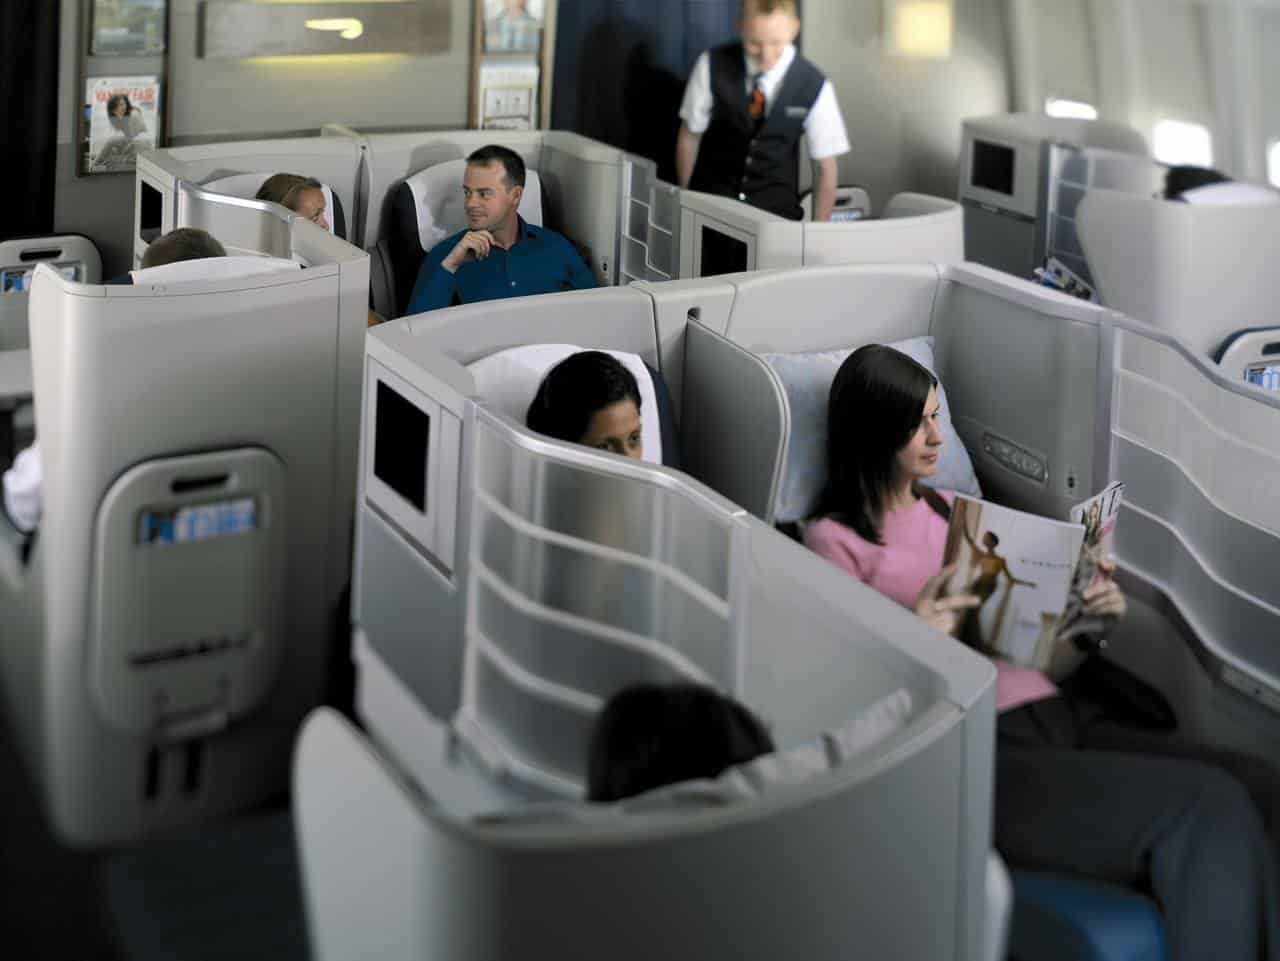 British Airways Business Class Cabin Club World with Passengers